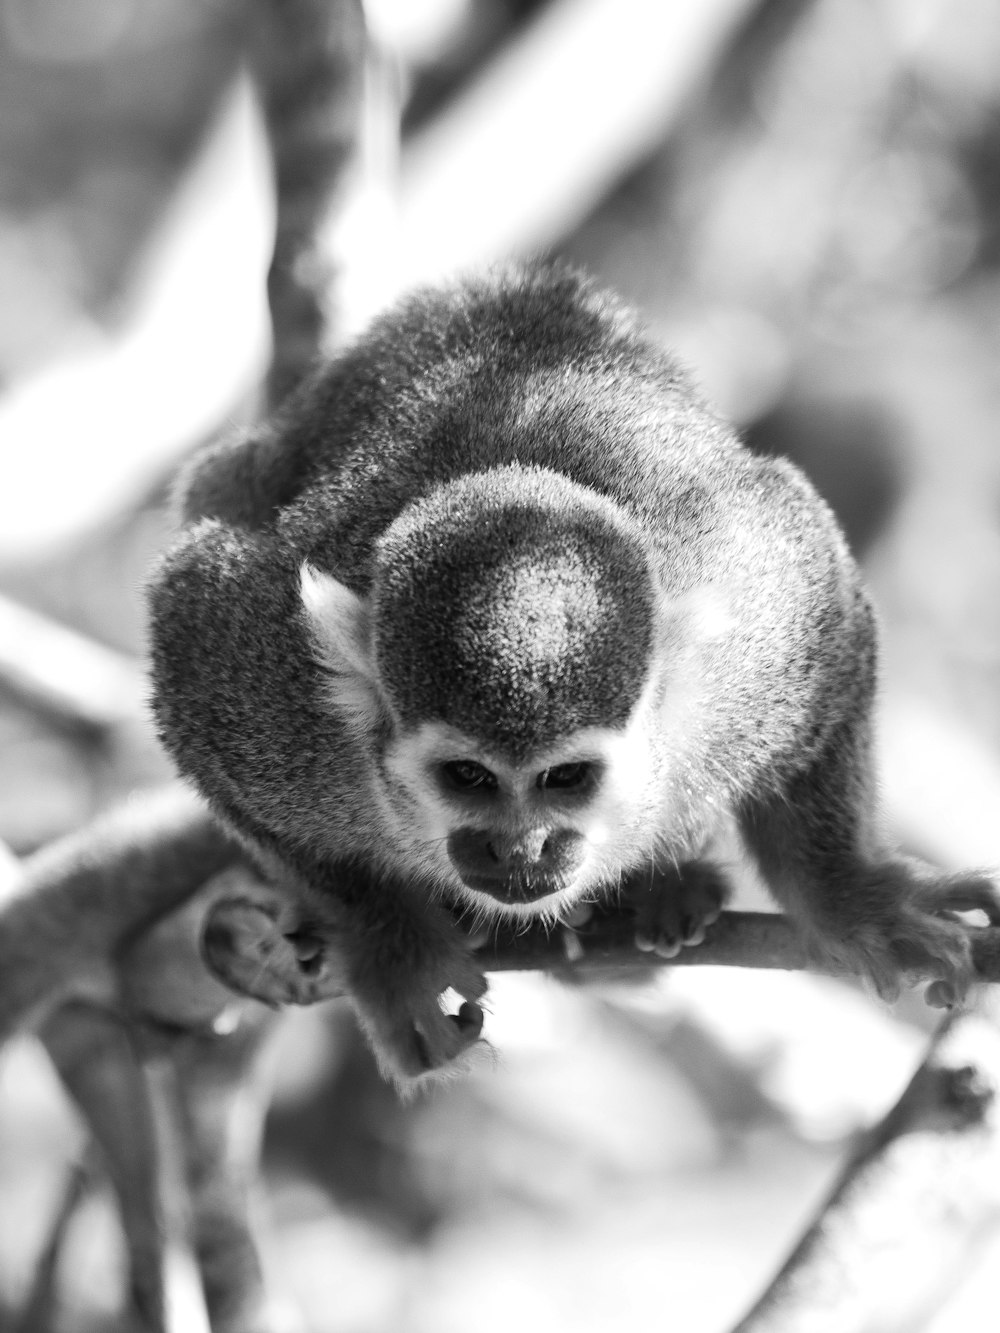 grayscale photography of monkey